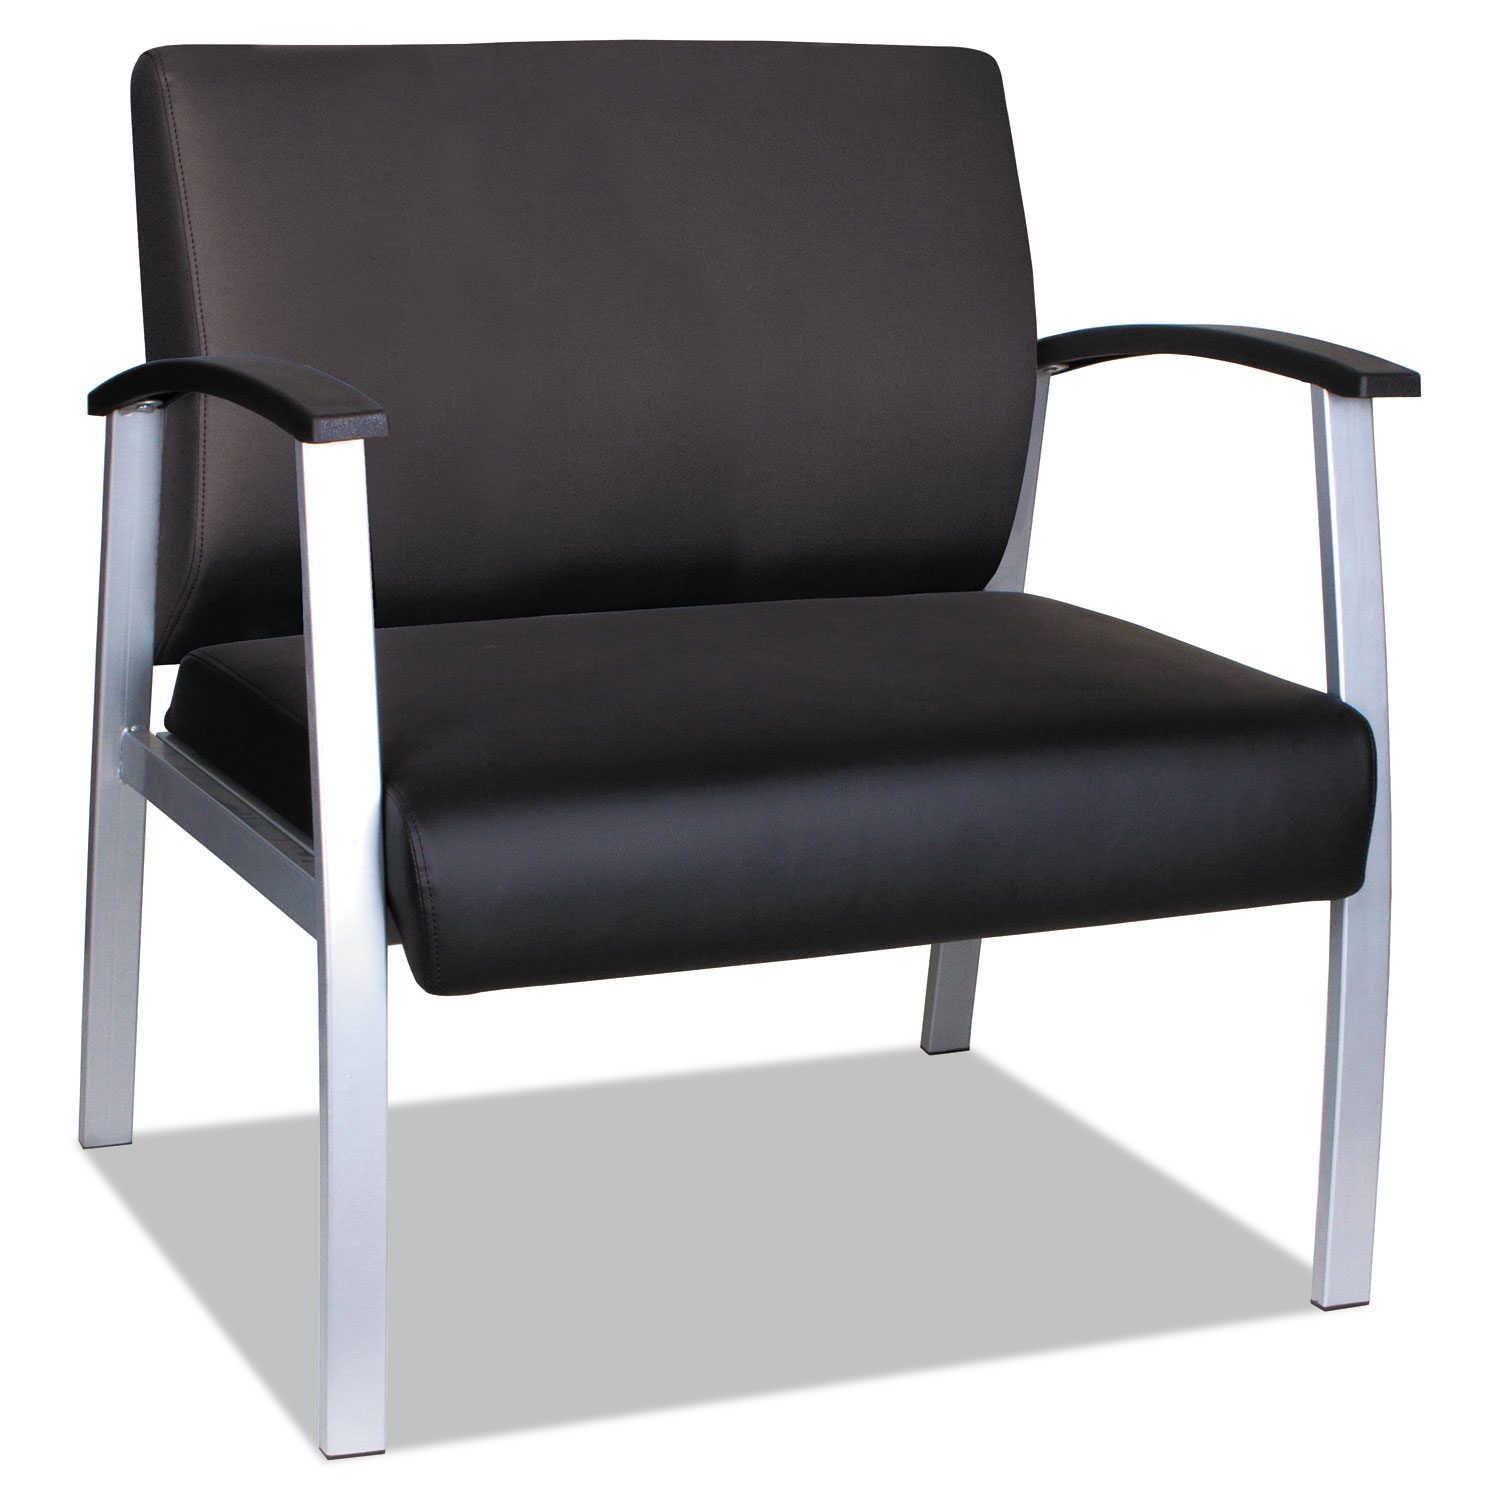  Alera ALEML2219 Alera metaLounge Series Bariatric Guest Chair, 30.51'' x 26.96'' x 33.46'', Black Seat/Black Back, Silver Base (ALEML2219) 